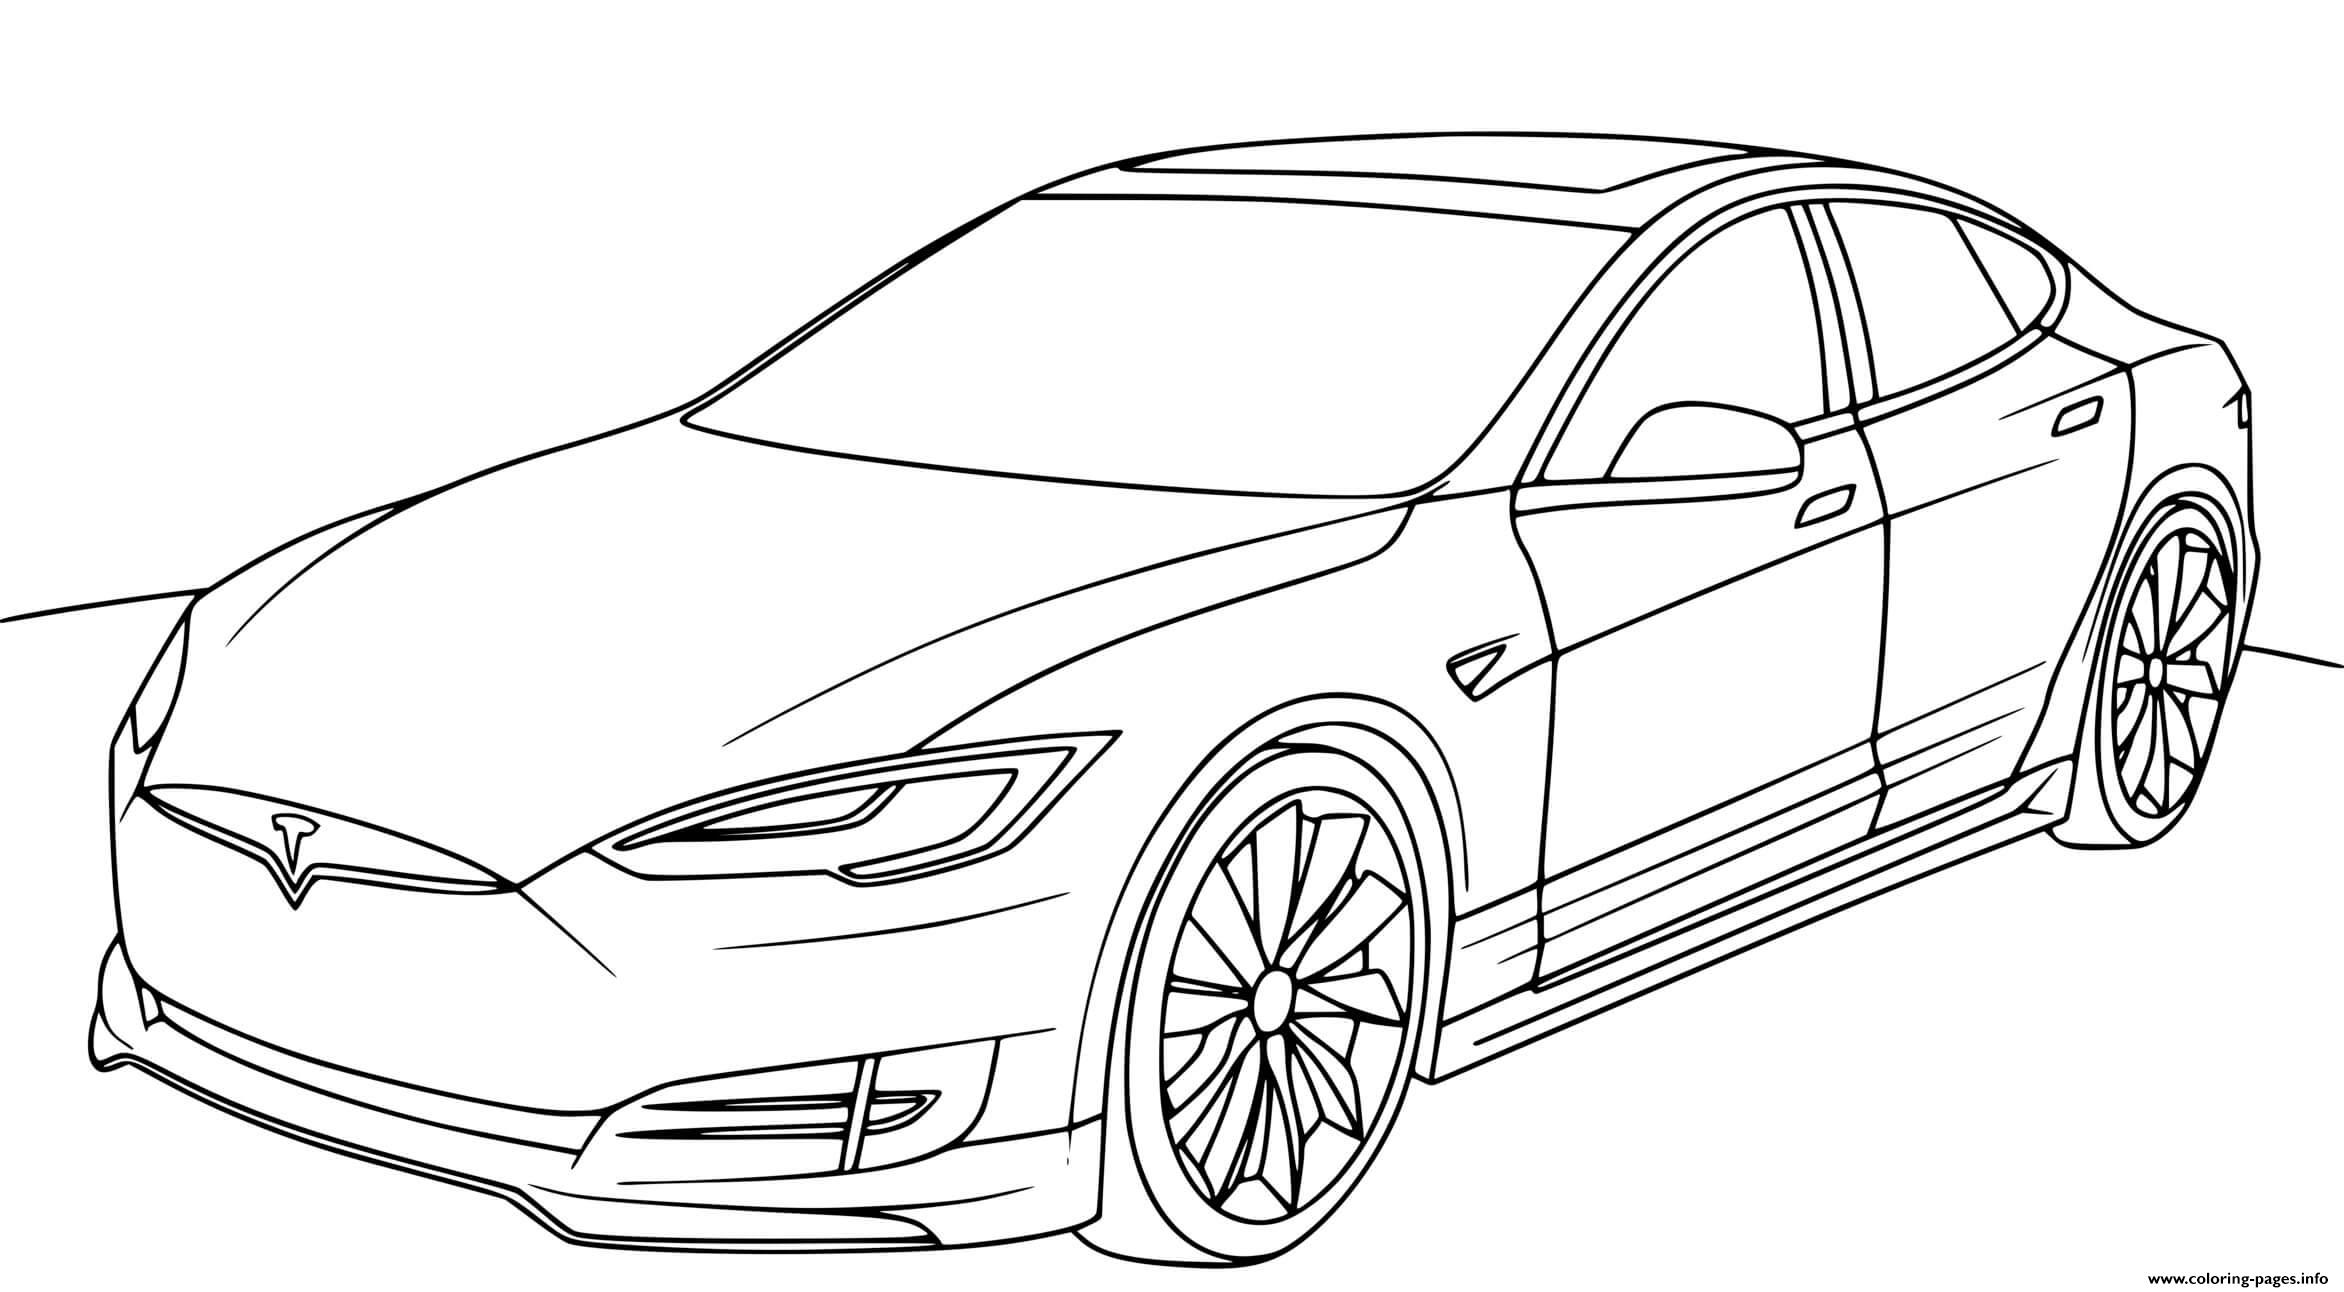 17+ Tesla Coloring Page AshlieghAoife